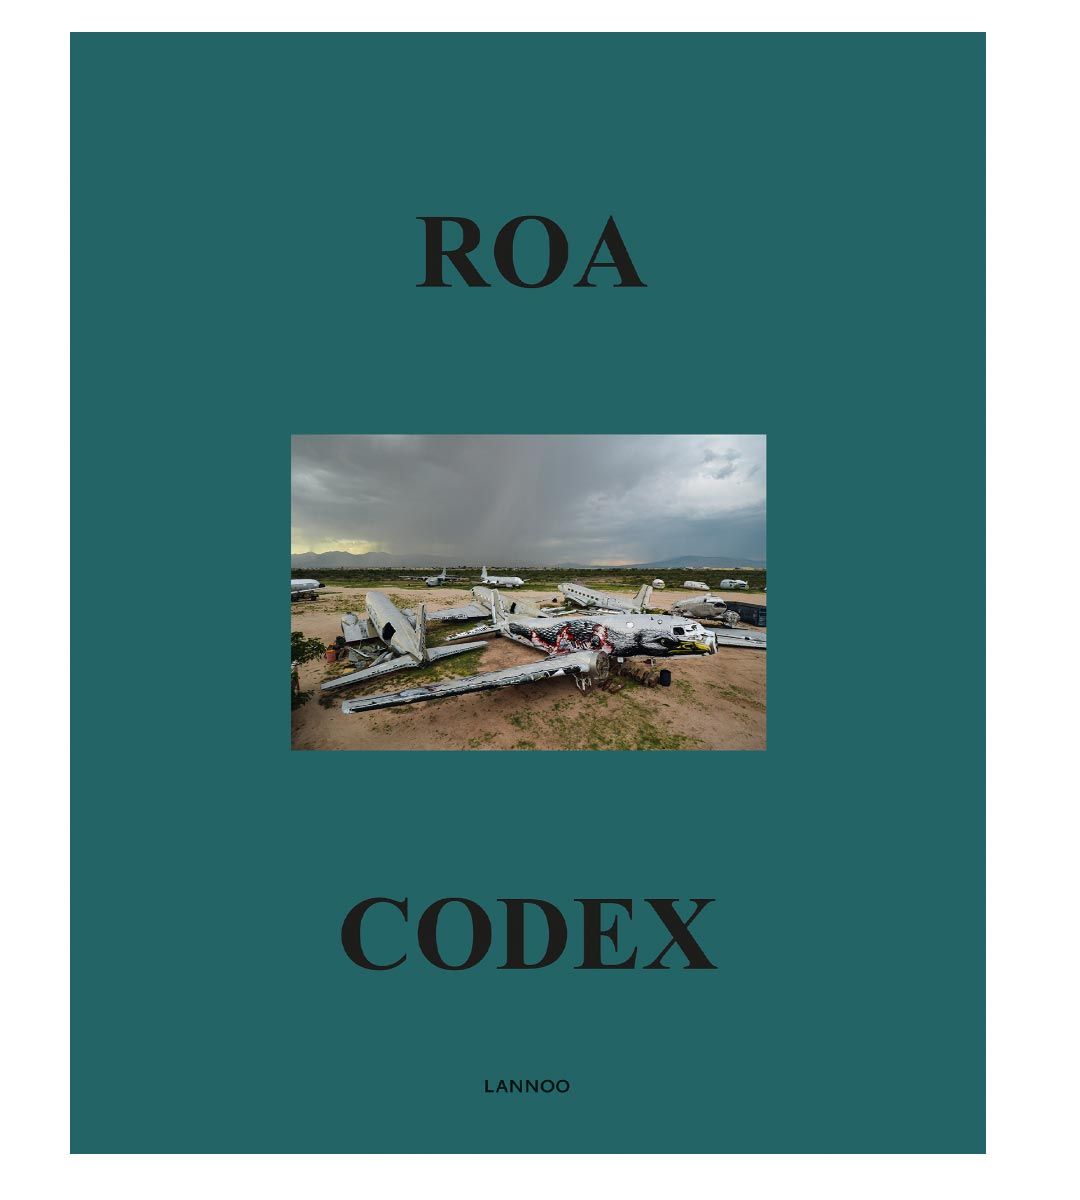 Roa - Codex